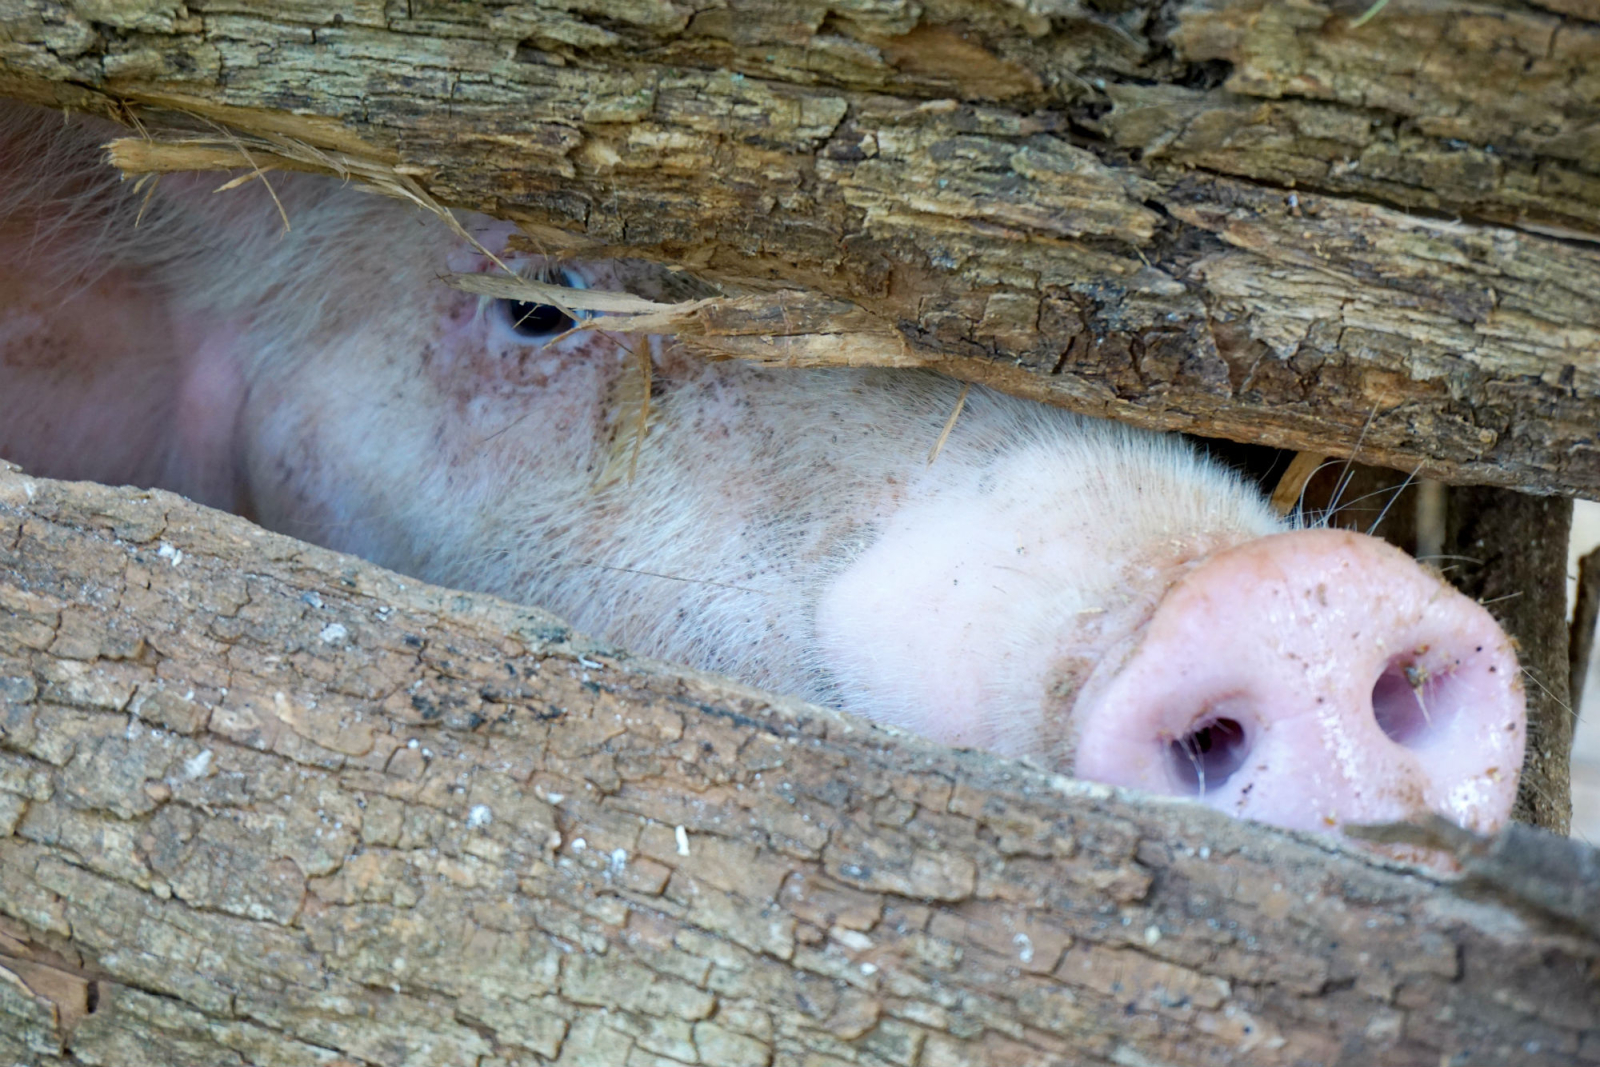 pig, pork, agriculture, animal welfare, animal cruelty